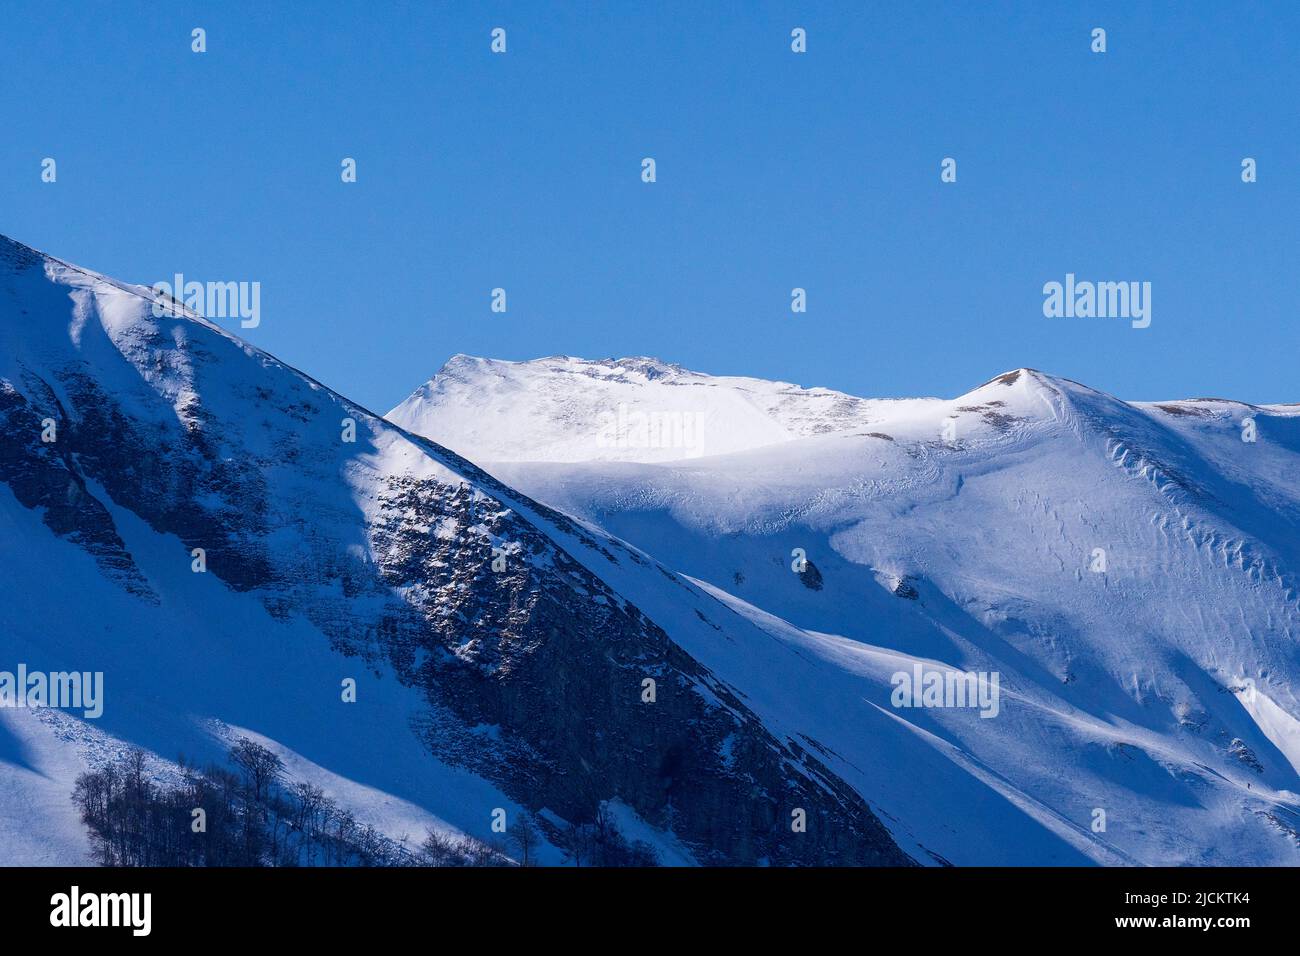 Monti Sibillini Nationa Park, Winter Landscape, View from Pintura of Bolognola, Marche, Italy, Europe Stock Photo